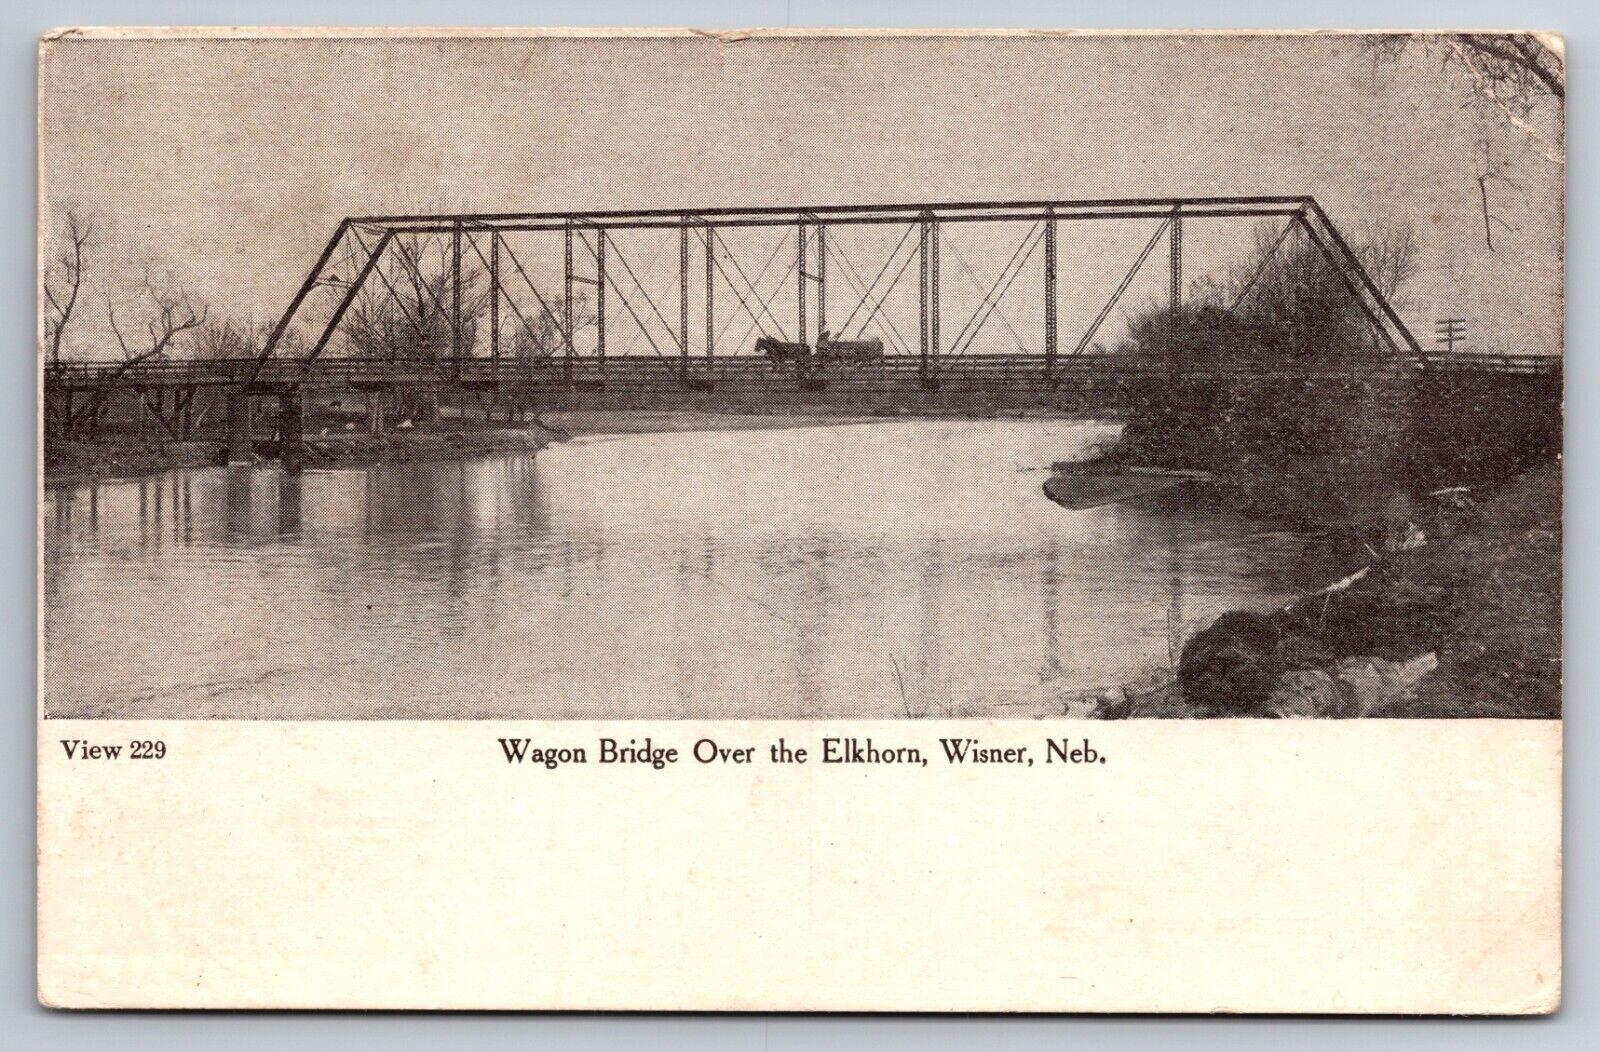 Wagon Bridge Over the Elkhorn River Wisner Nebraska NE 1908 Postcard